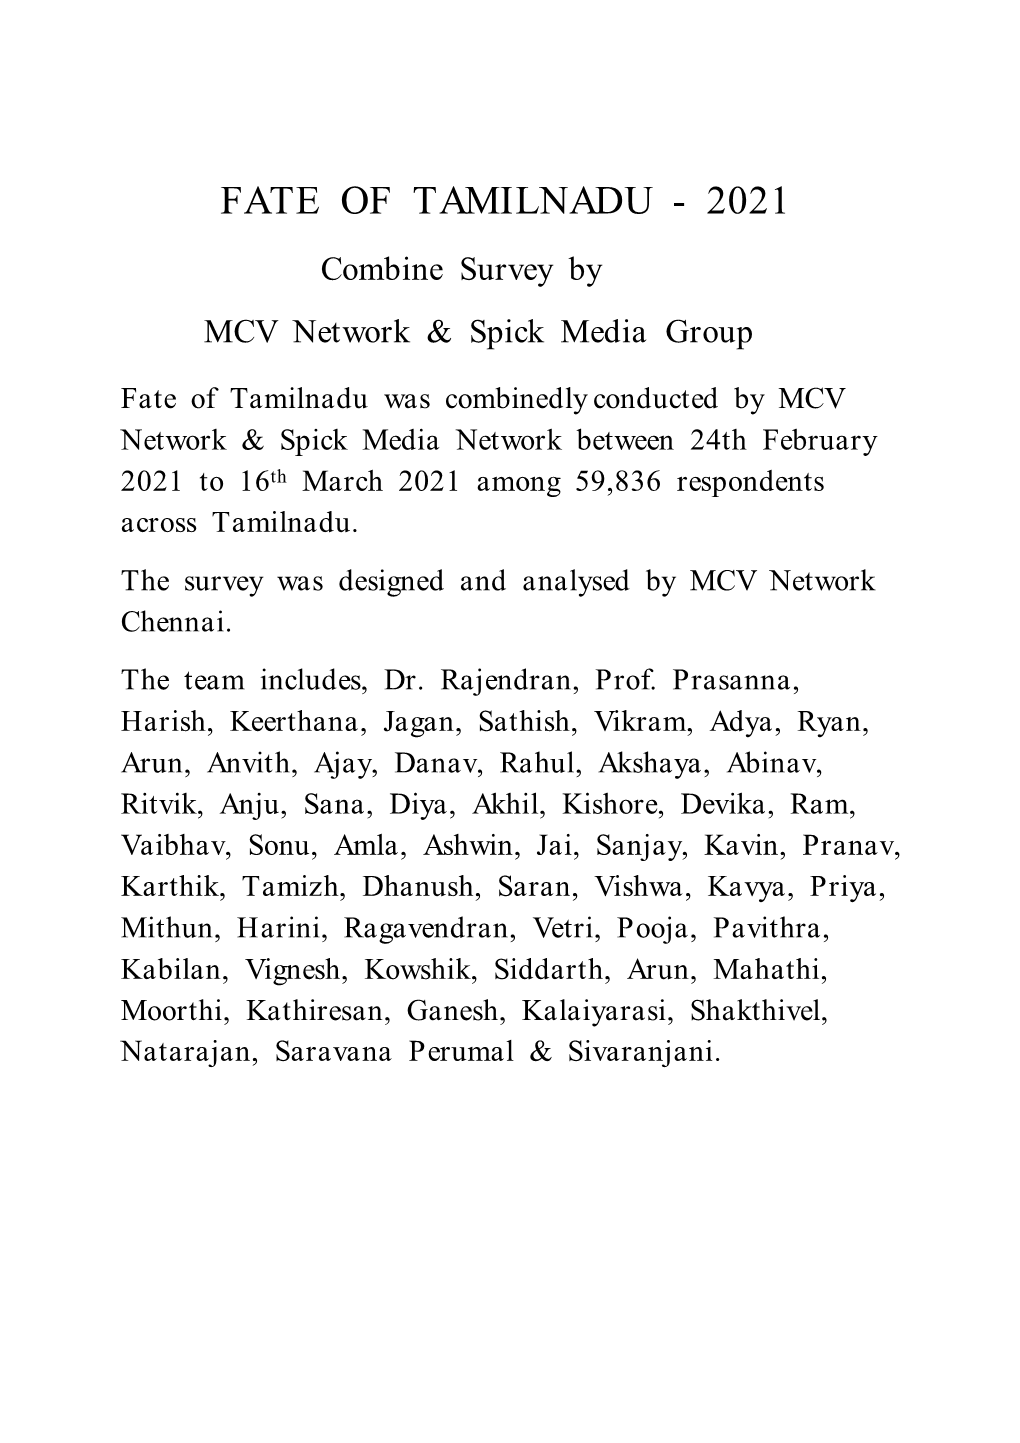 FATE of TAMILNADU - 2021 Combine Survey by MCV Network & Spick Media Group